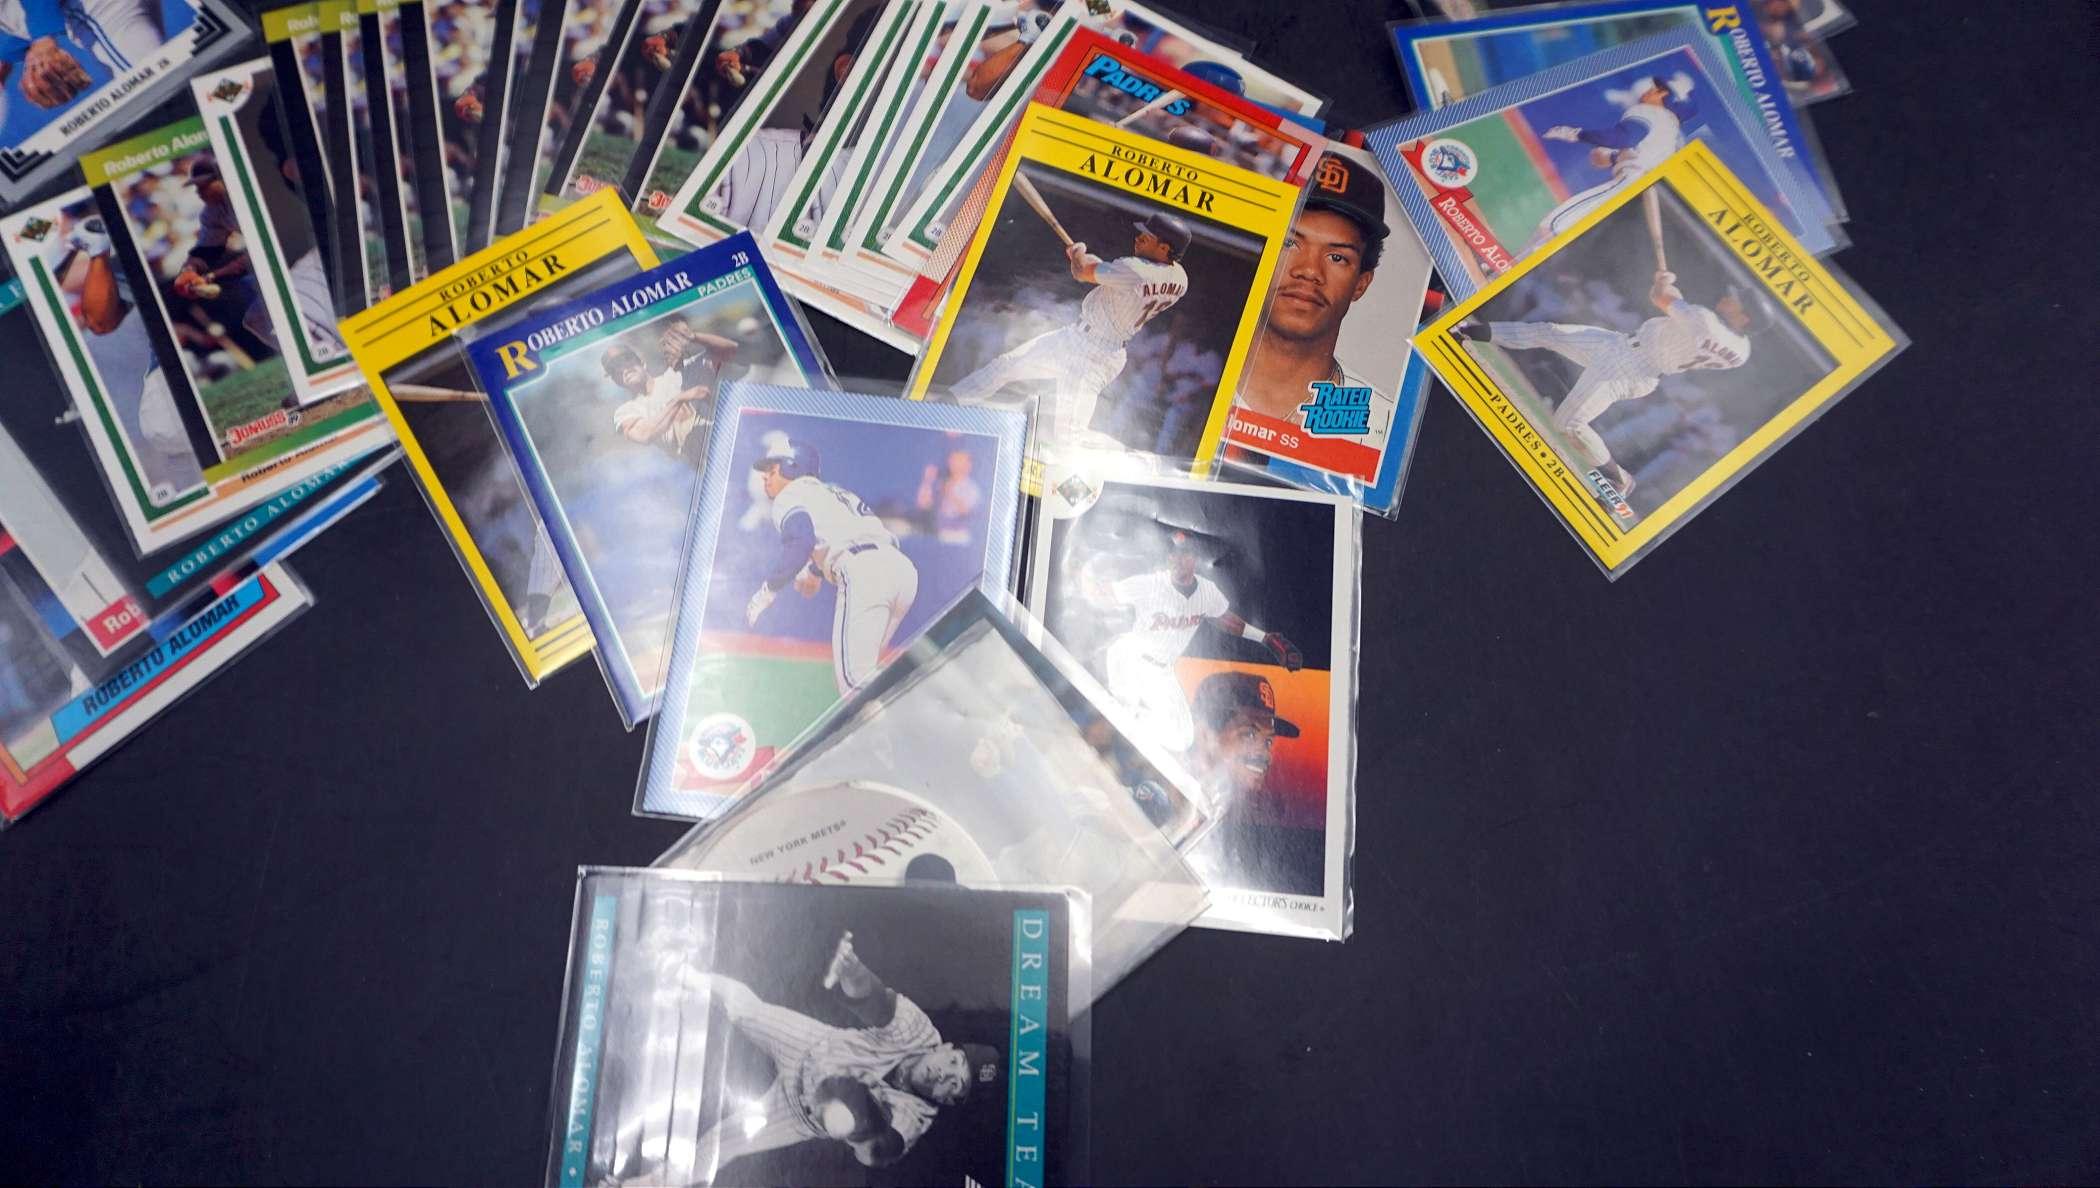 63 - Roberto Alomar Baseball Cards W/ Rookies (All Sleeved)